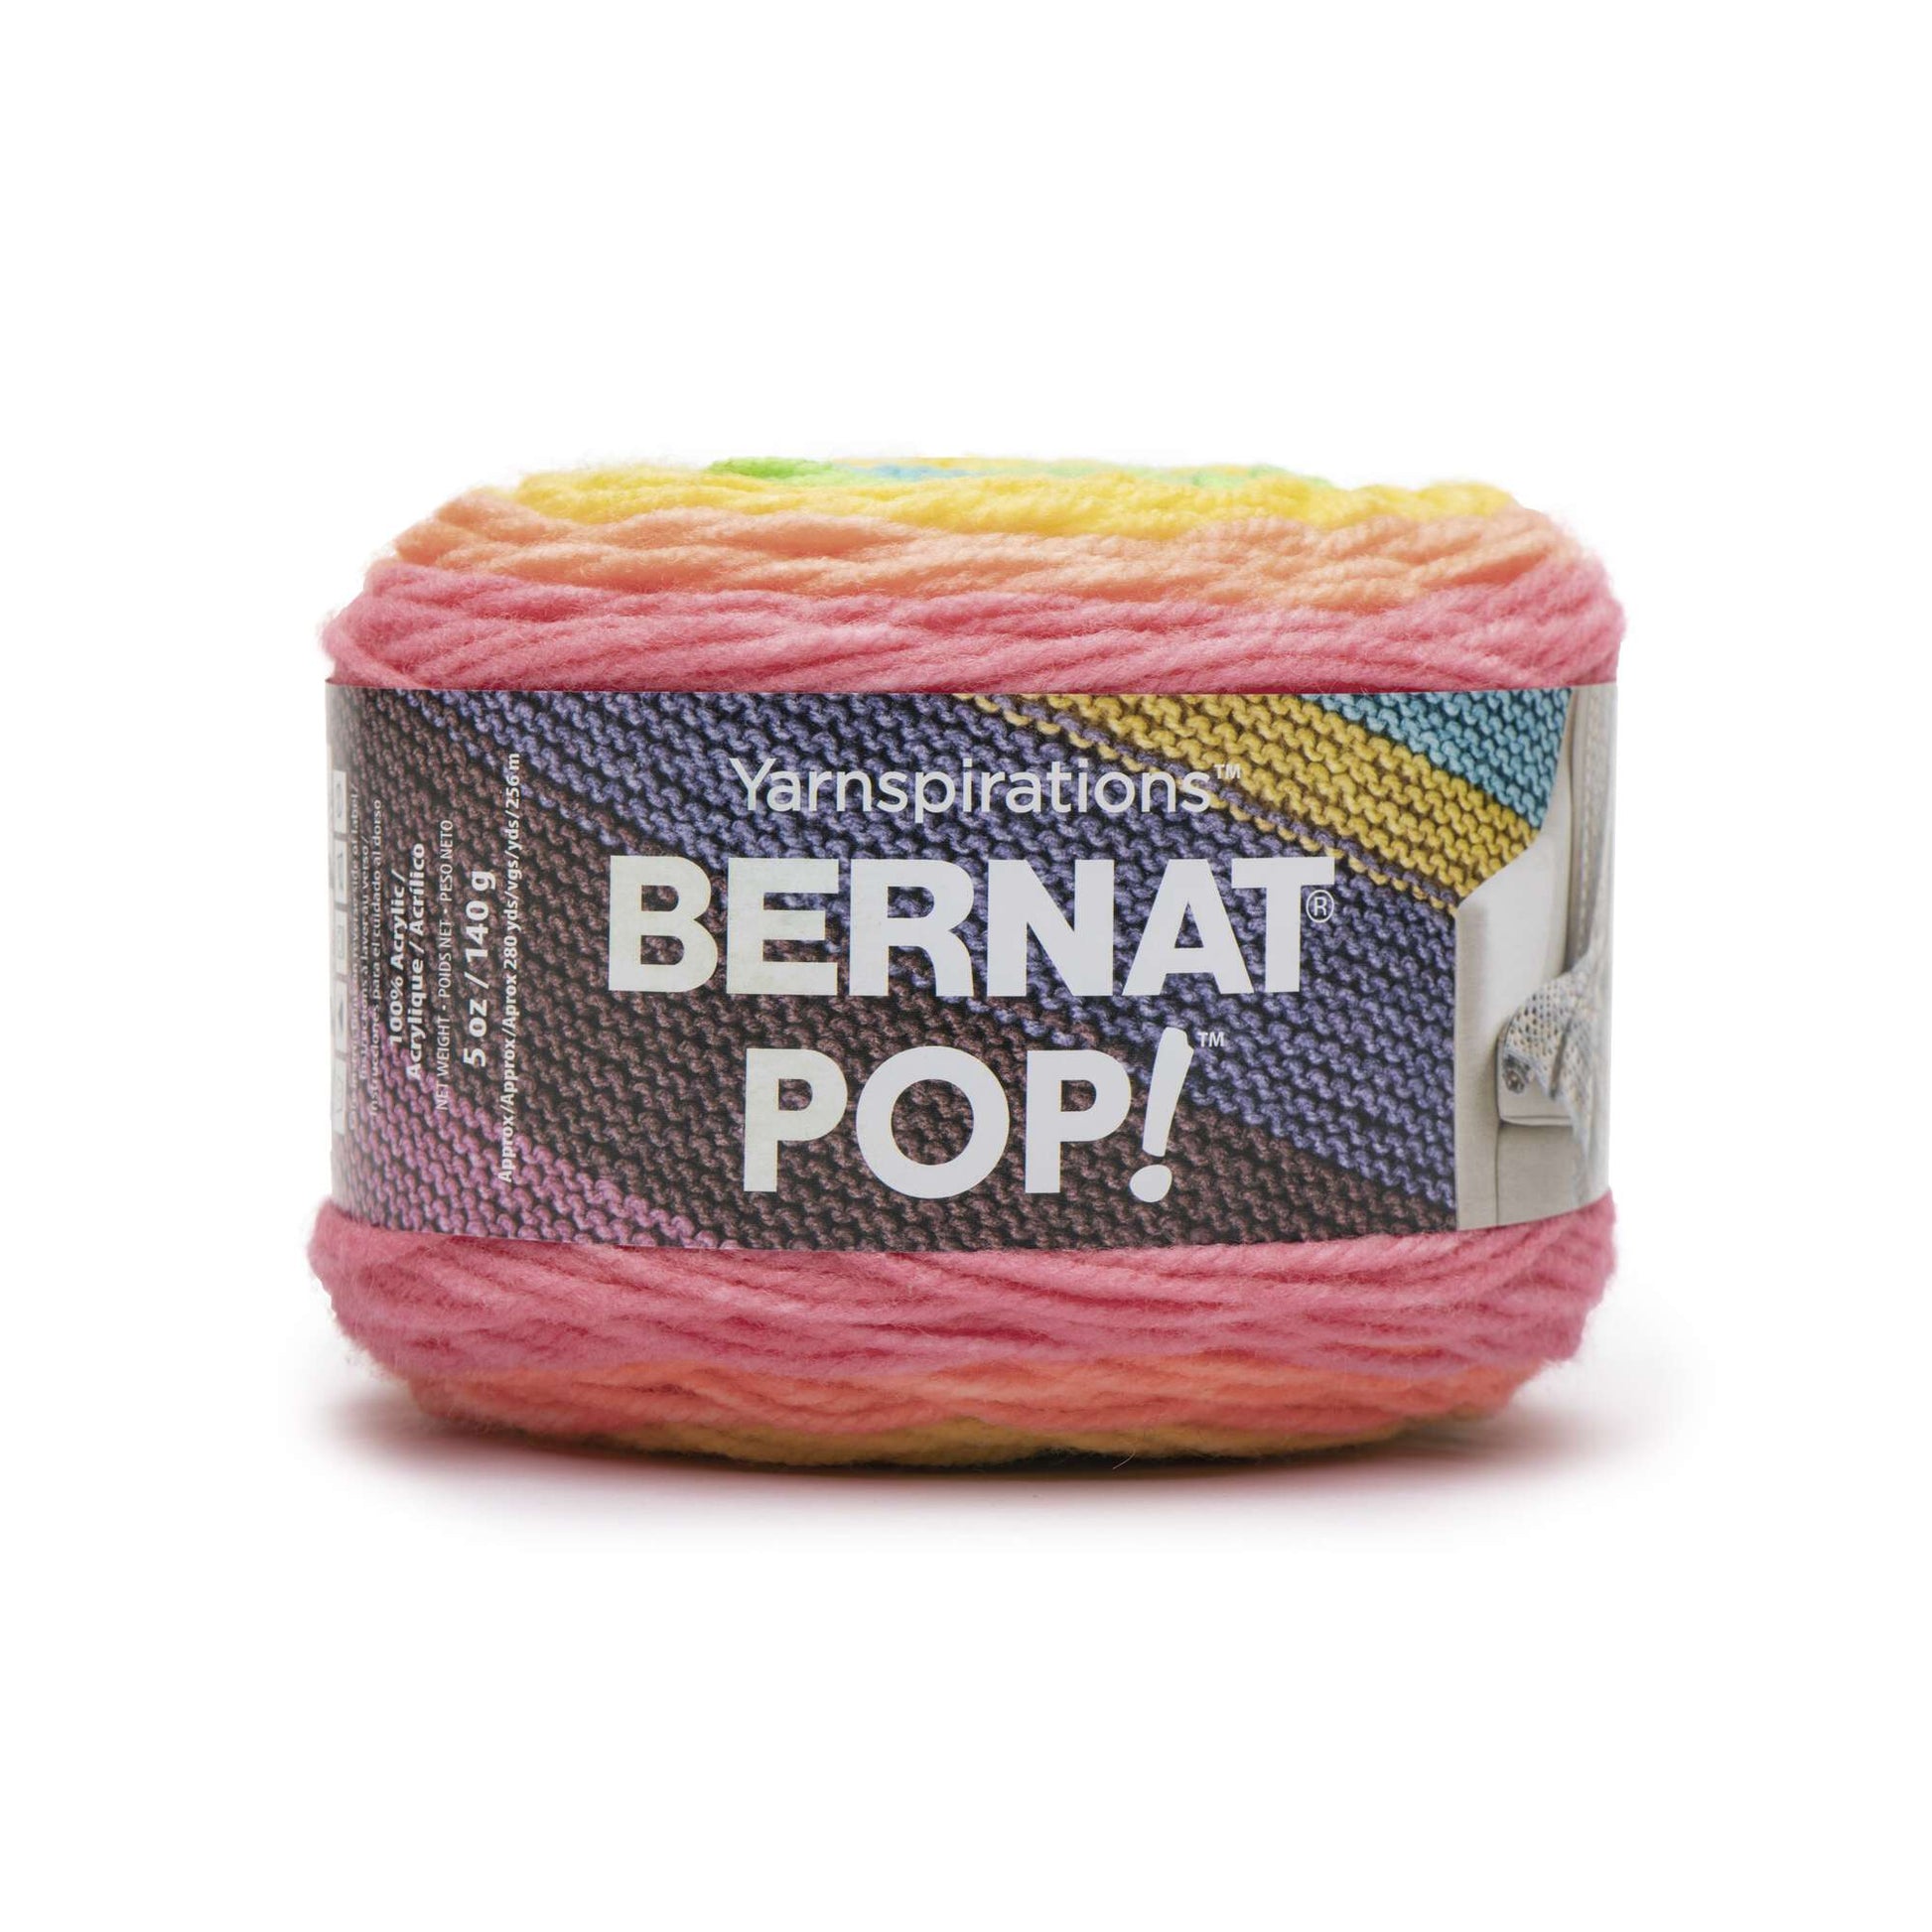 Bernat Pop Cosmic Yarn - 3 Pack of 141g/5oz - Acrylic - 4 Medium